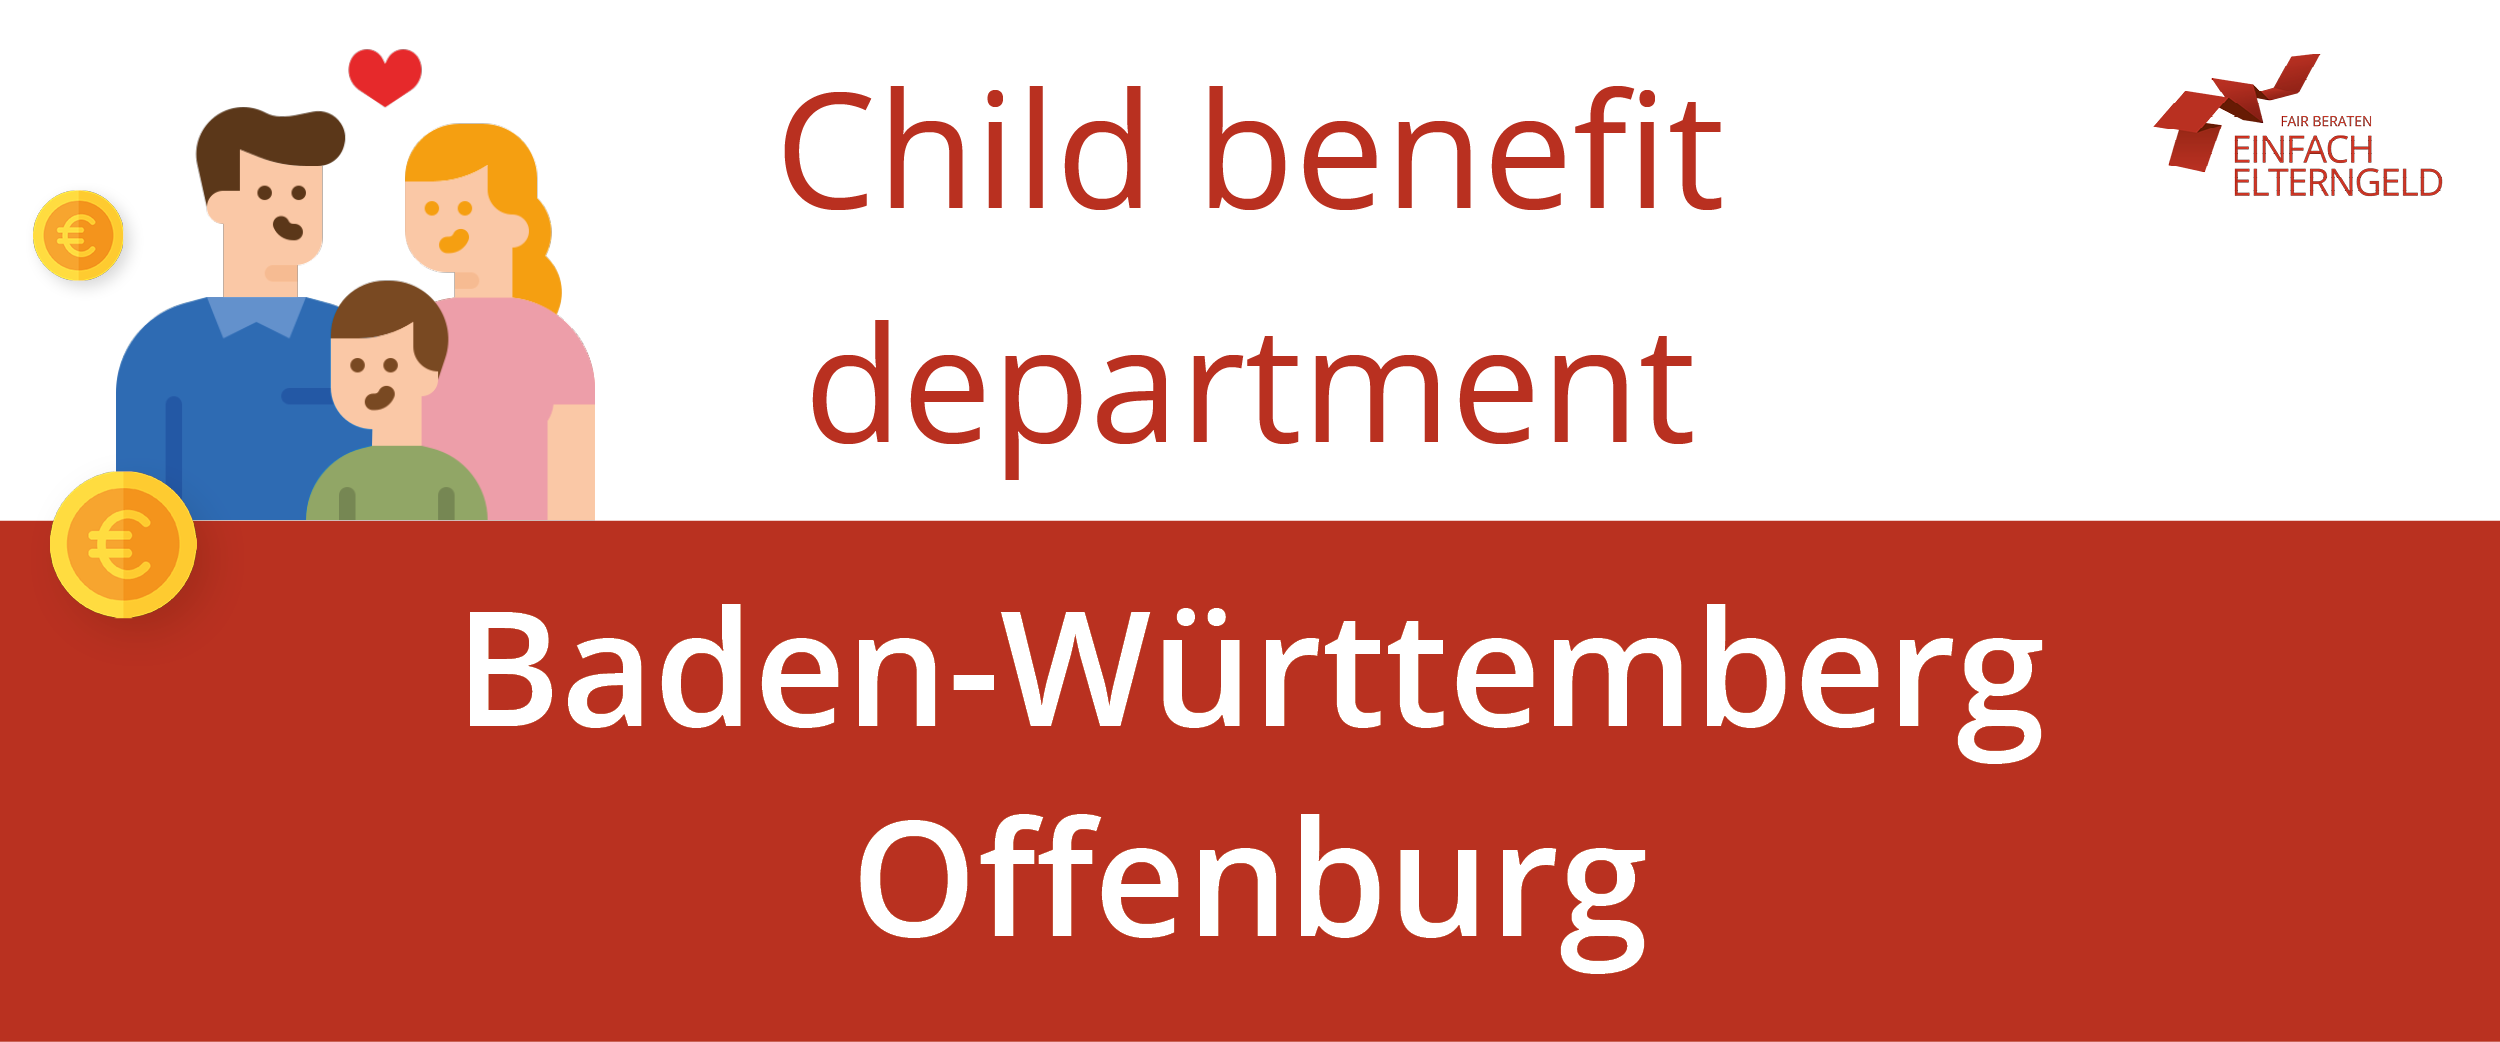 We present you the Child benefit department Baden-Württemberg Offenburg.